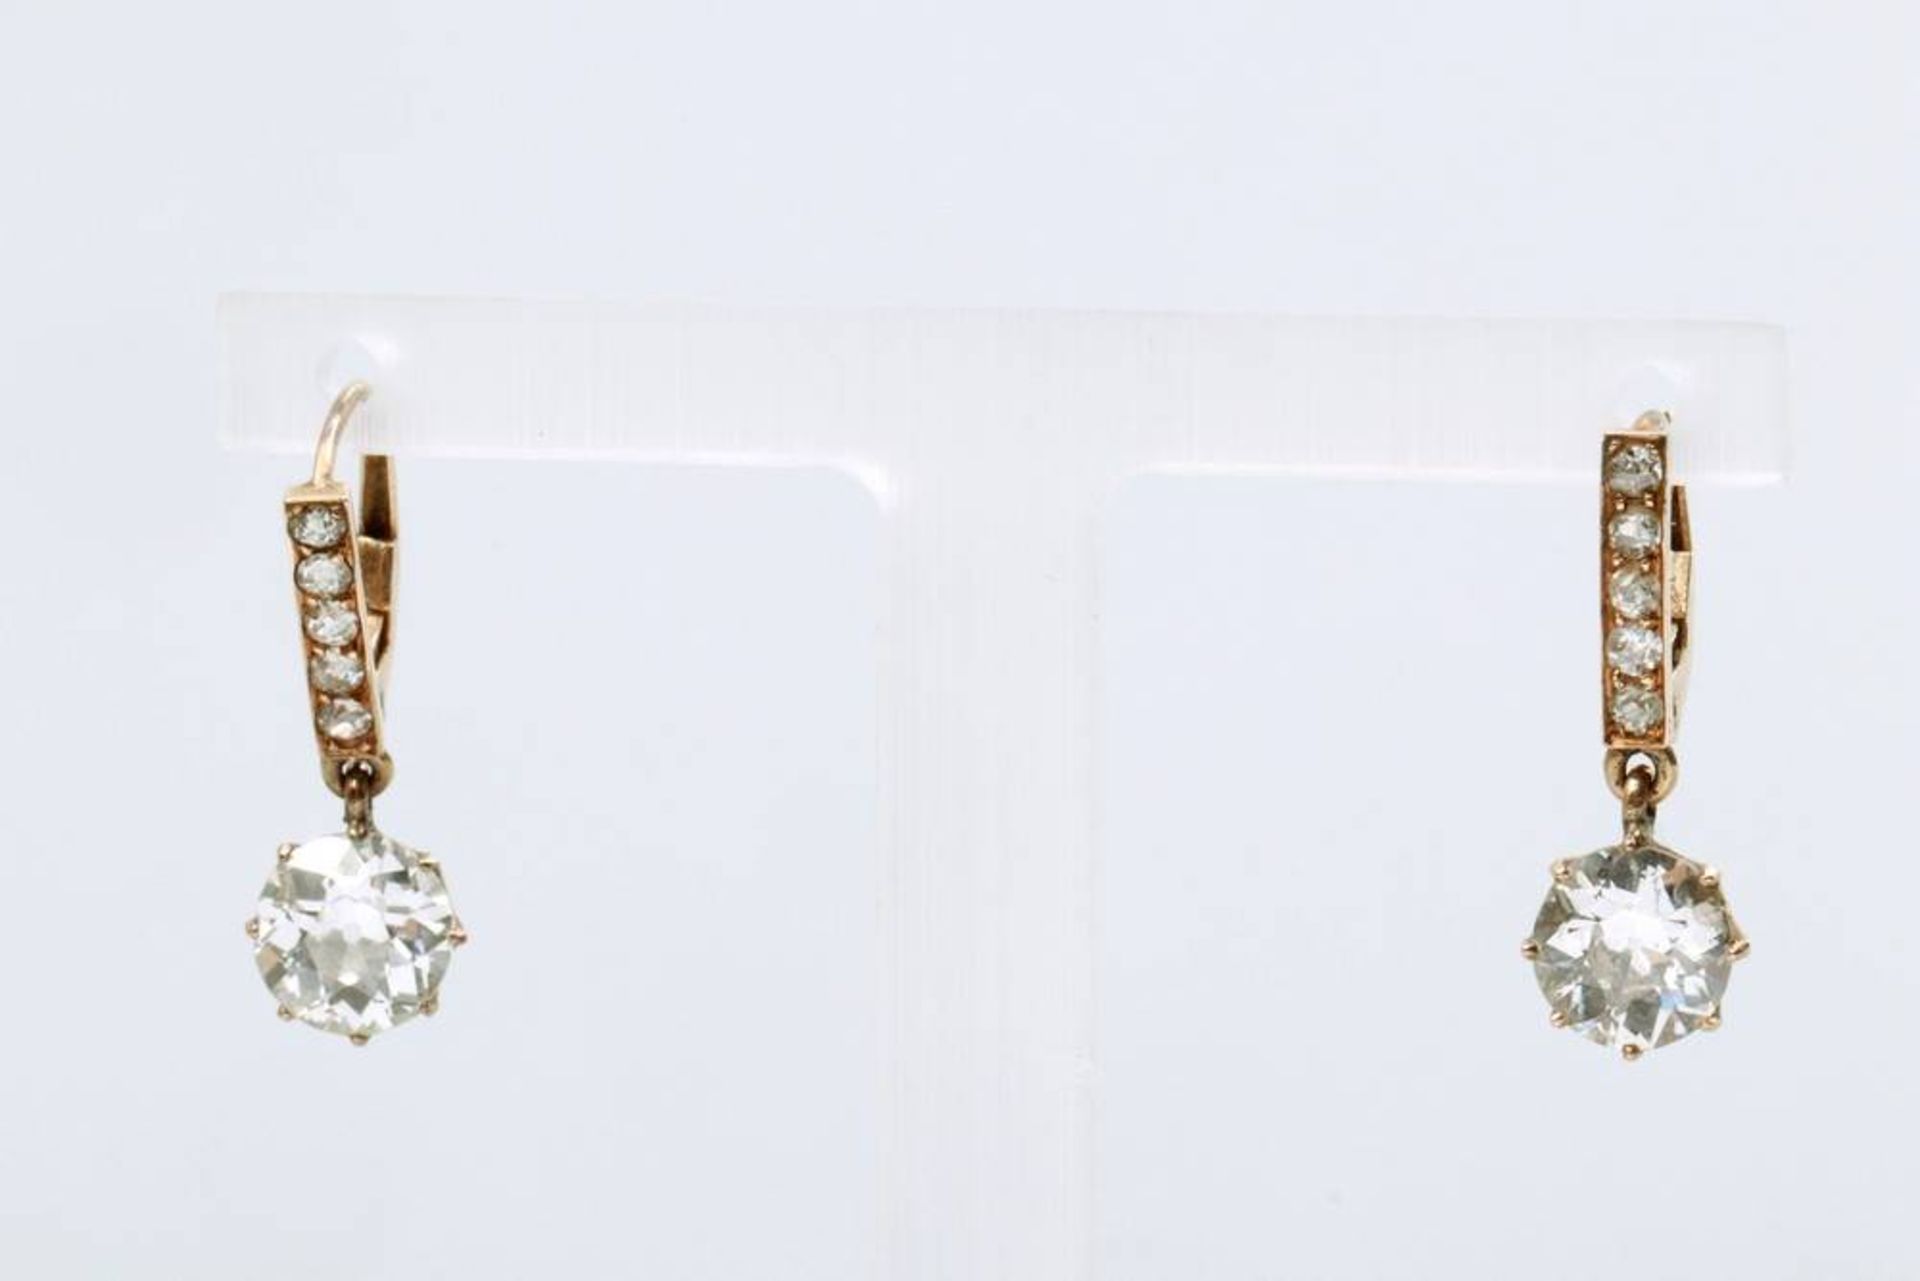 Art Deco earrings595 rosegold, ca. 1930, each set with diamonds in transitional cut, ca. 1,18ct, P1, - Bild 2 aus 3